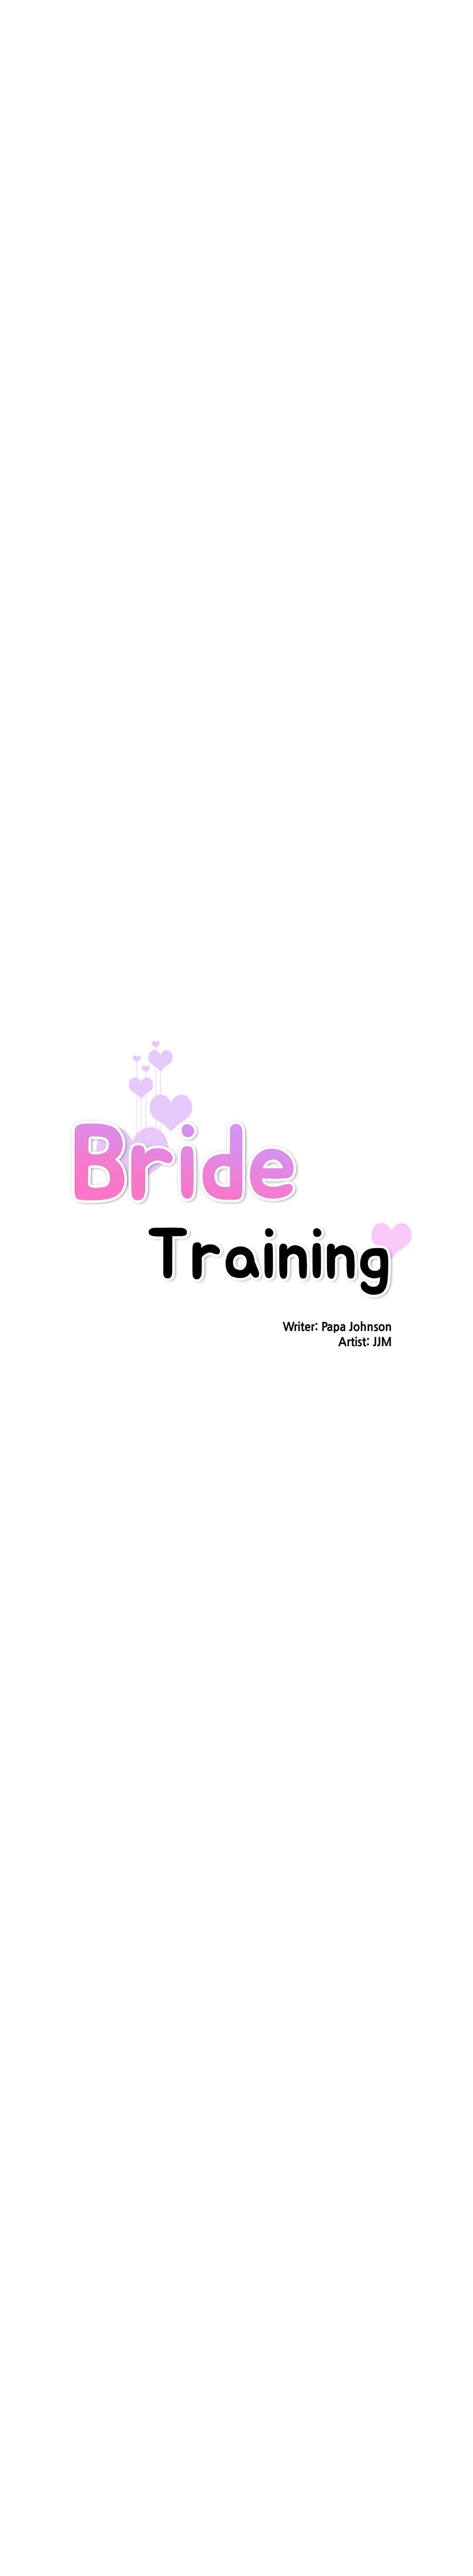 Bride Training image